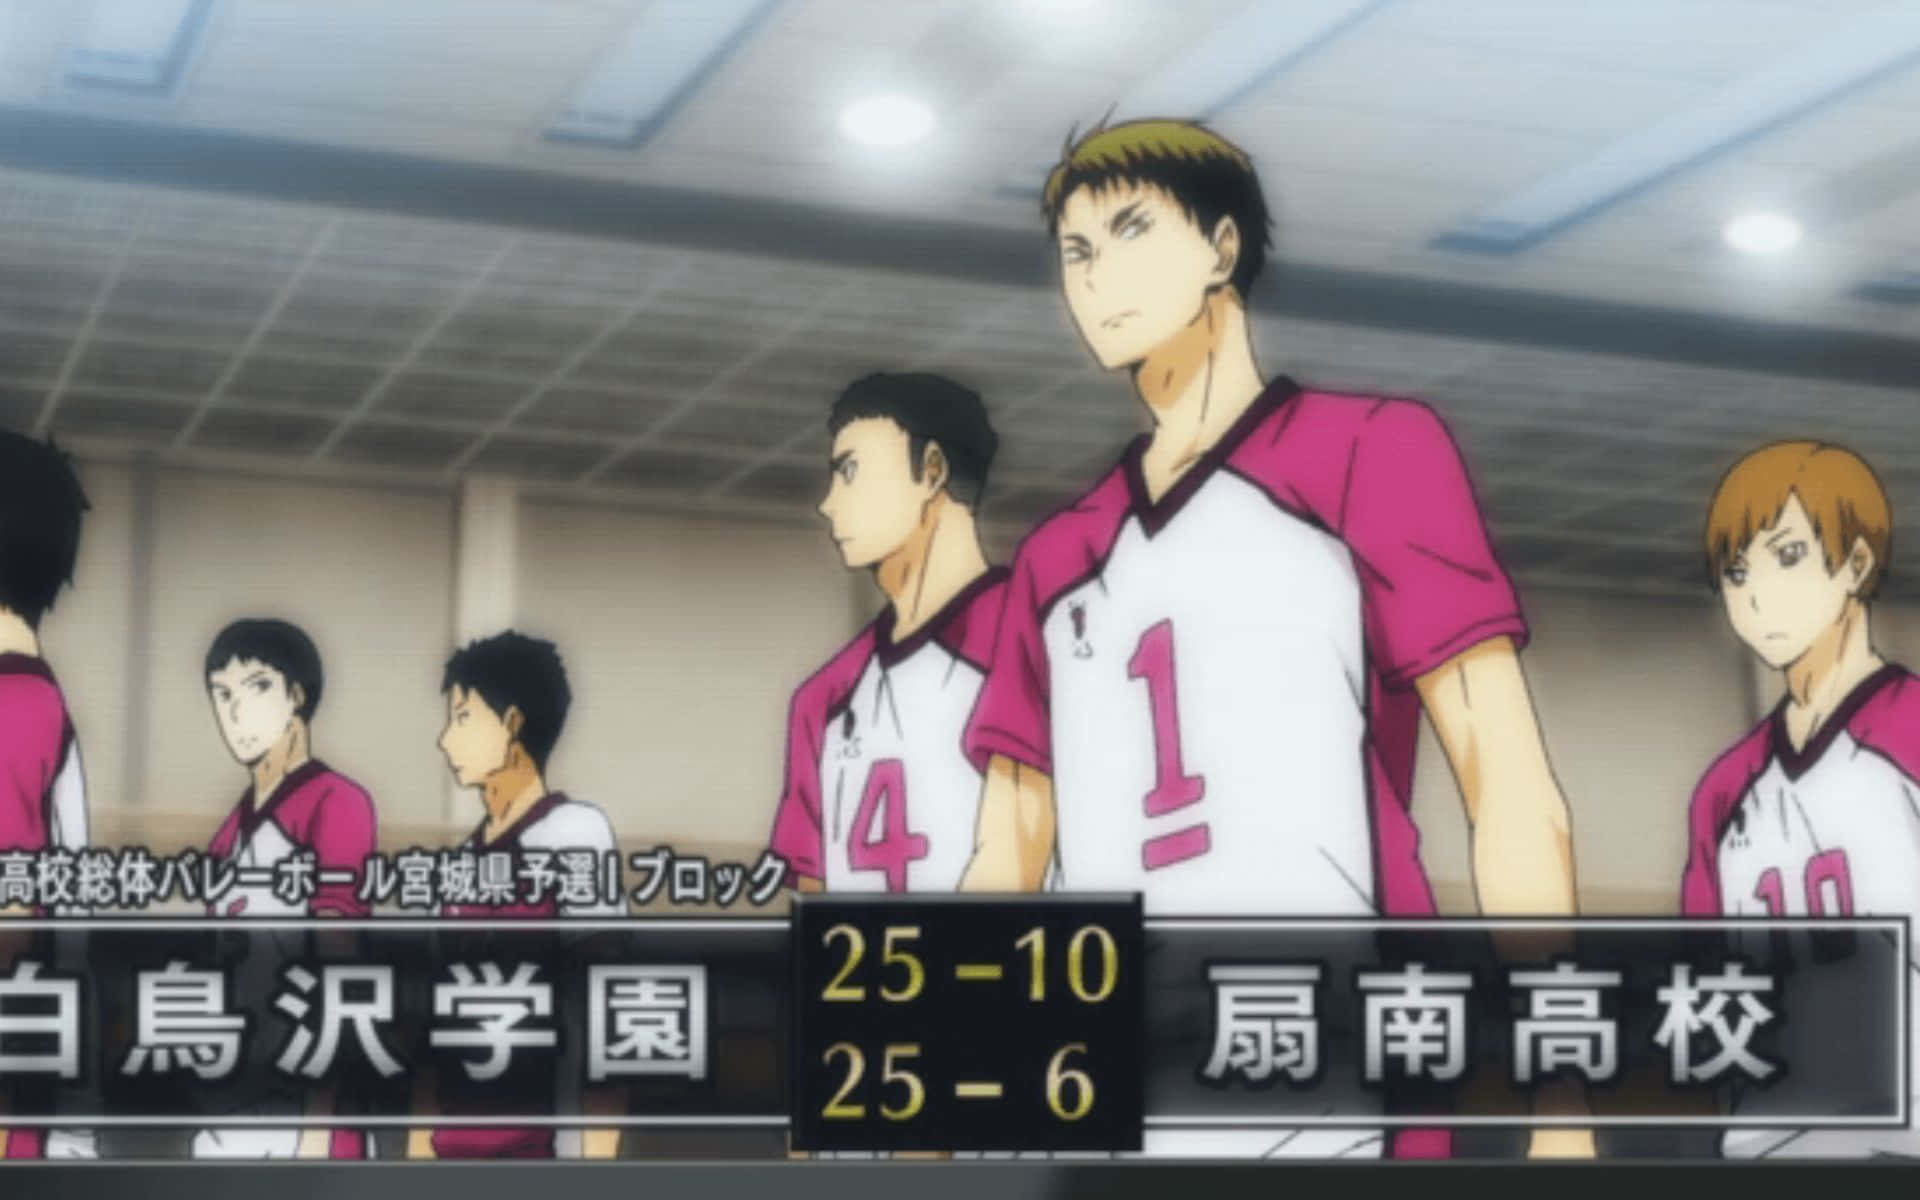 Ushijima Wakatoshi making a powerful spike in a volleyball game Wallpaper